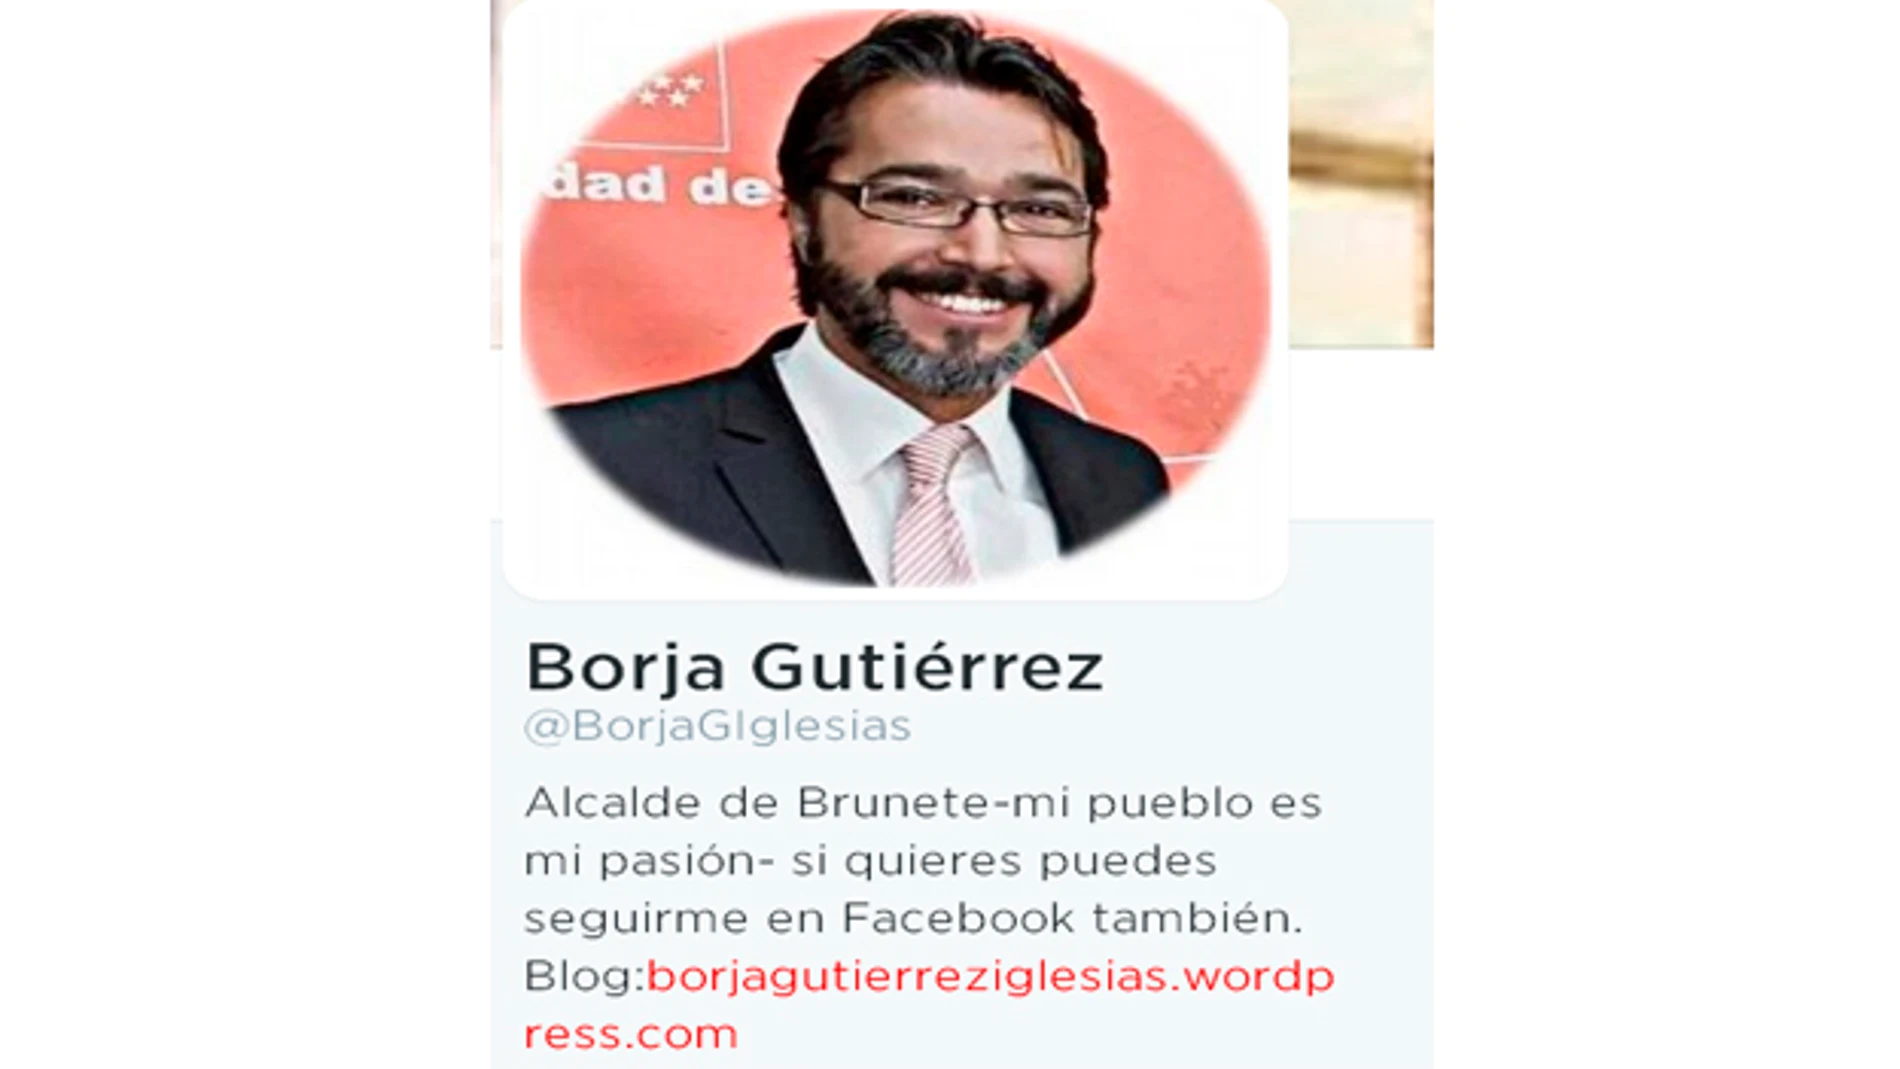 Borja Gutiérrez, alcalde de Brunete